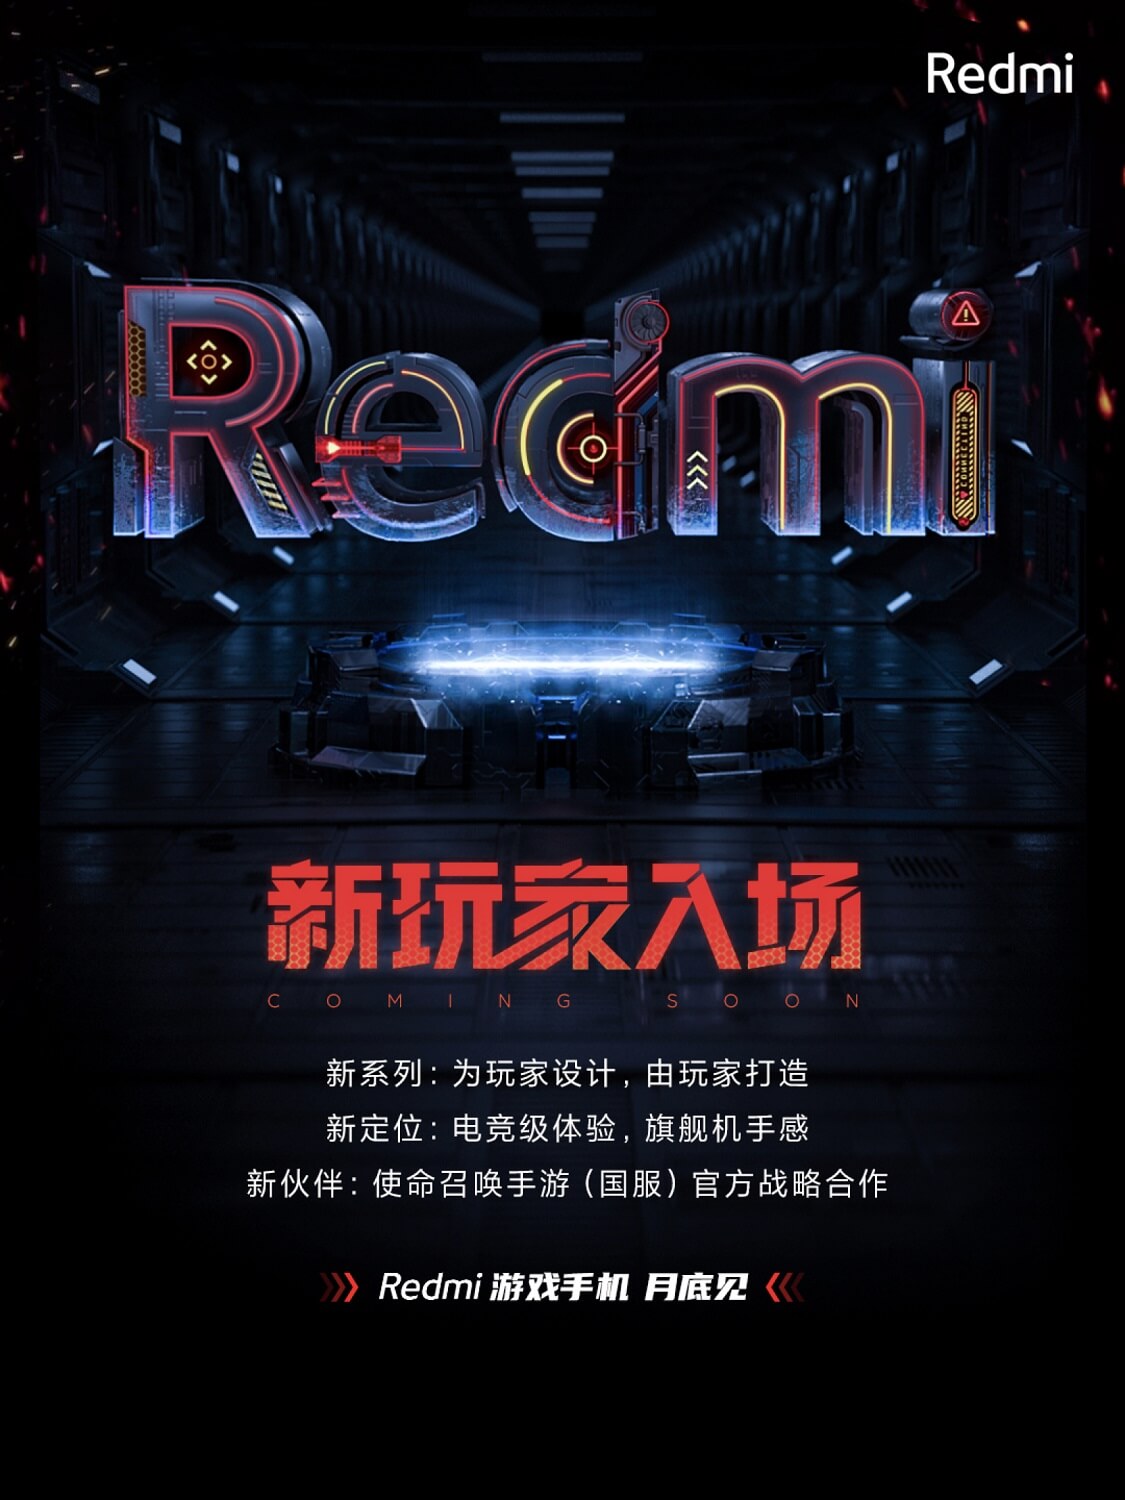 Redmi Gaming Phone launch soon 1